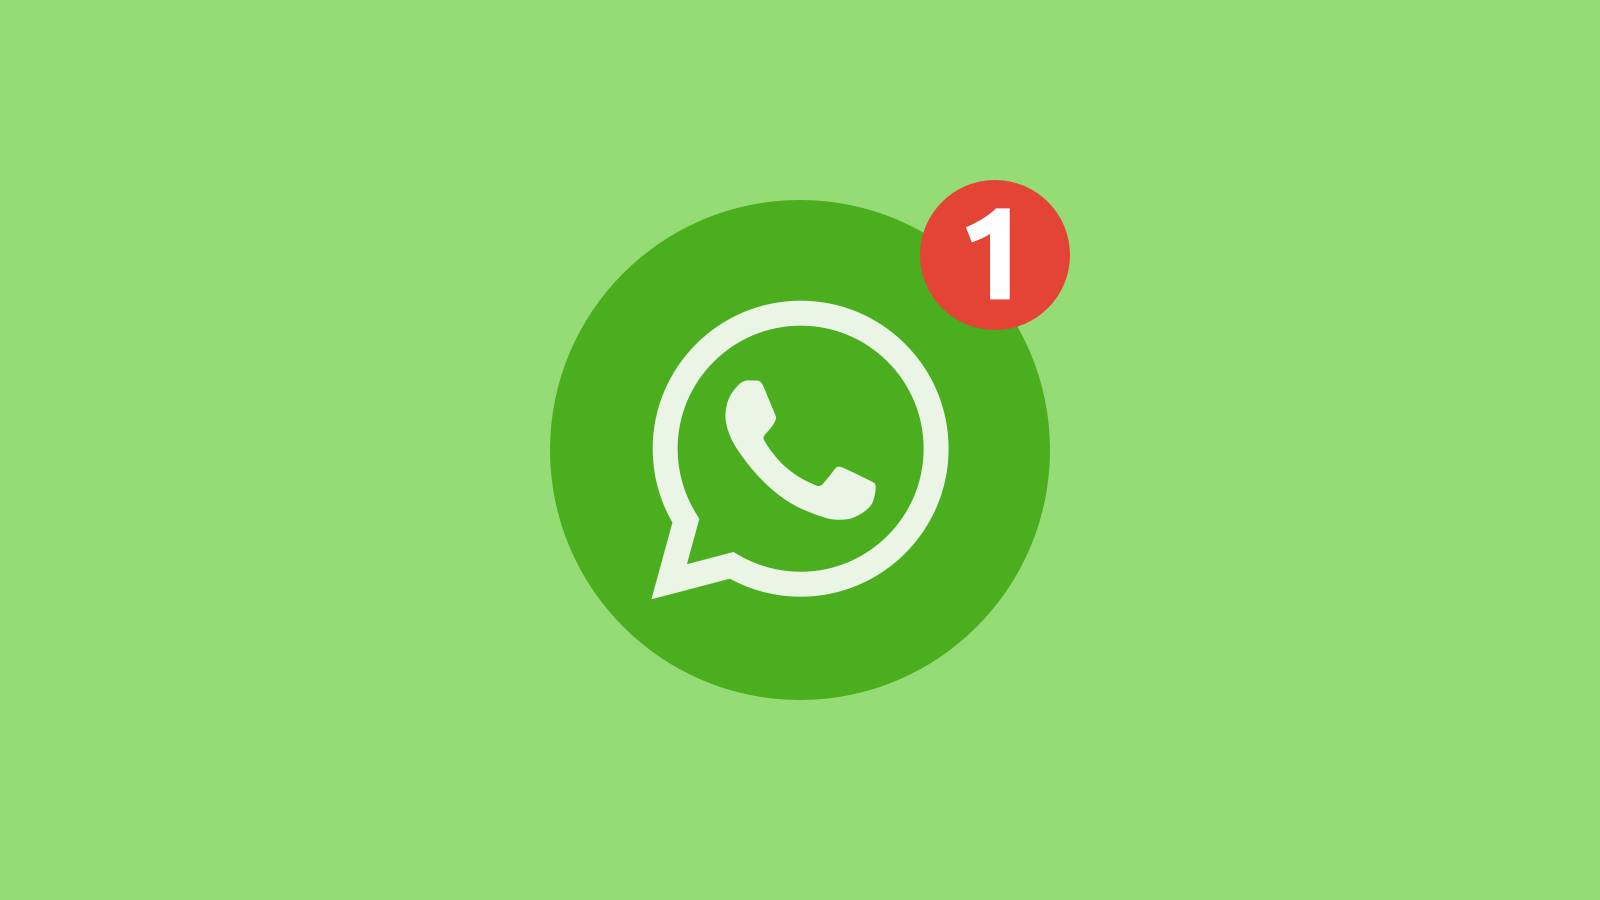 WhatsApp limitare